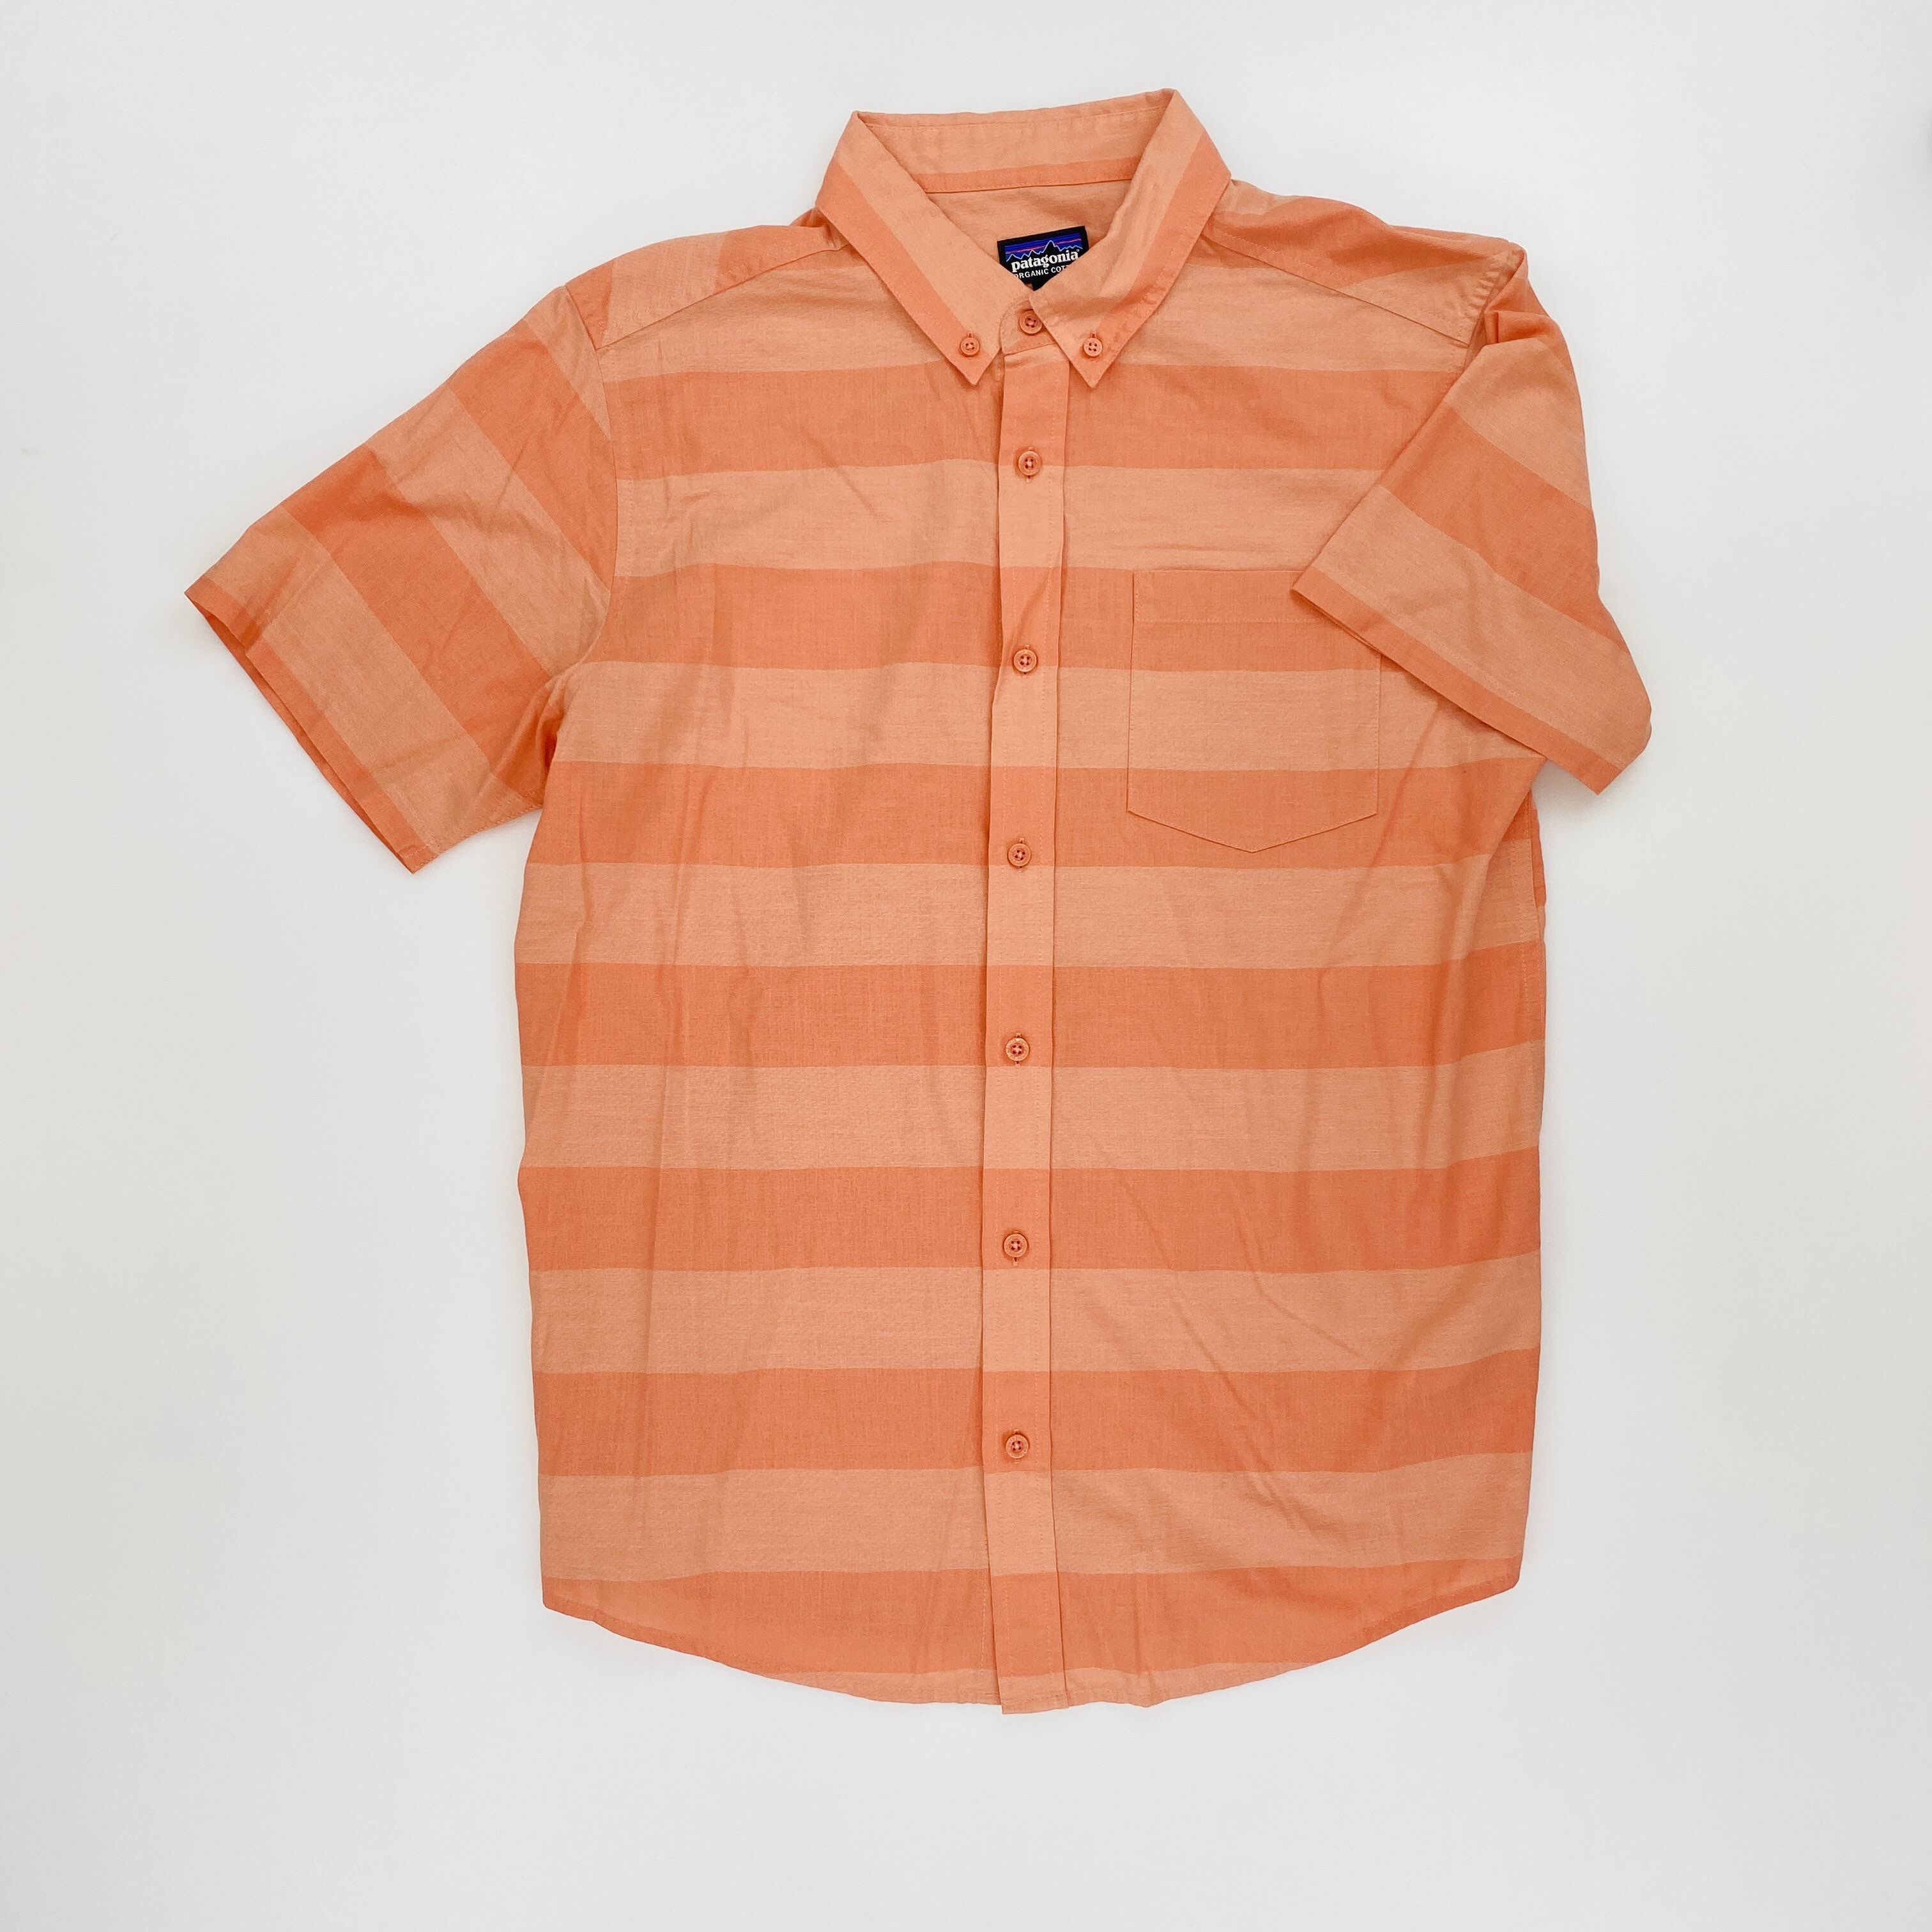 Patagonia M's LW Bluffside Shirt - Camicia di seconda mano - Uomo - Arancia - M | Hardloop